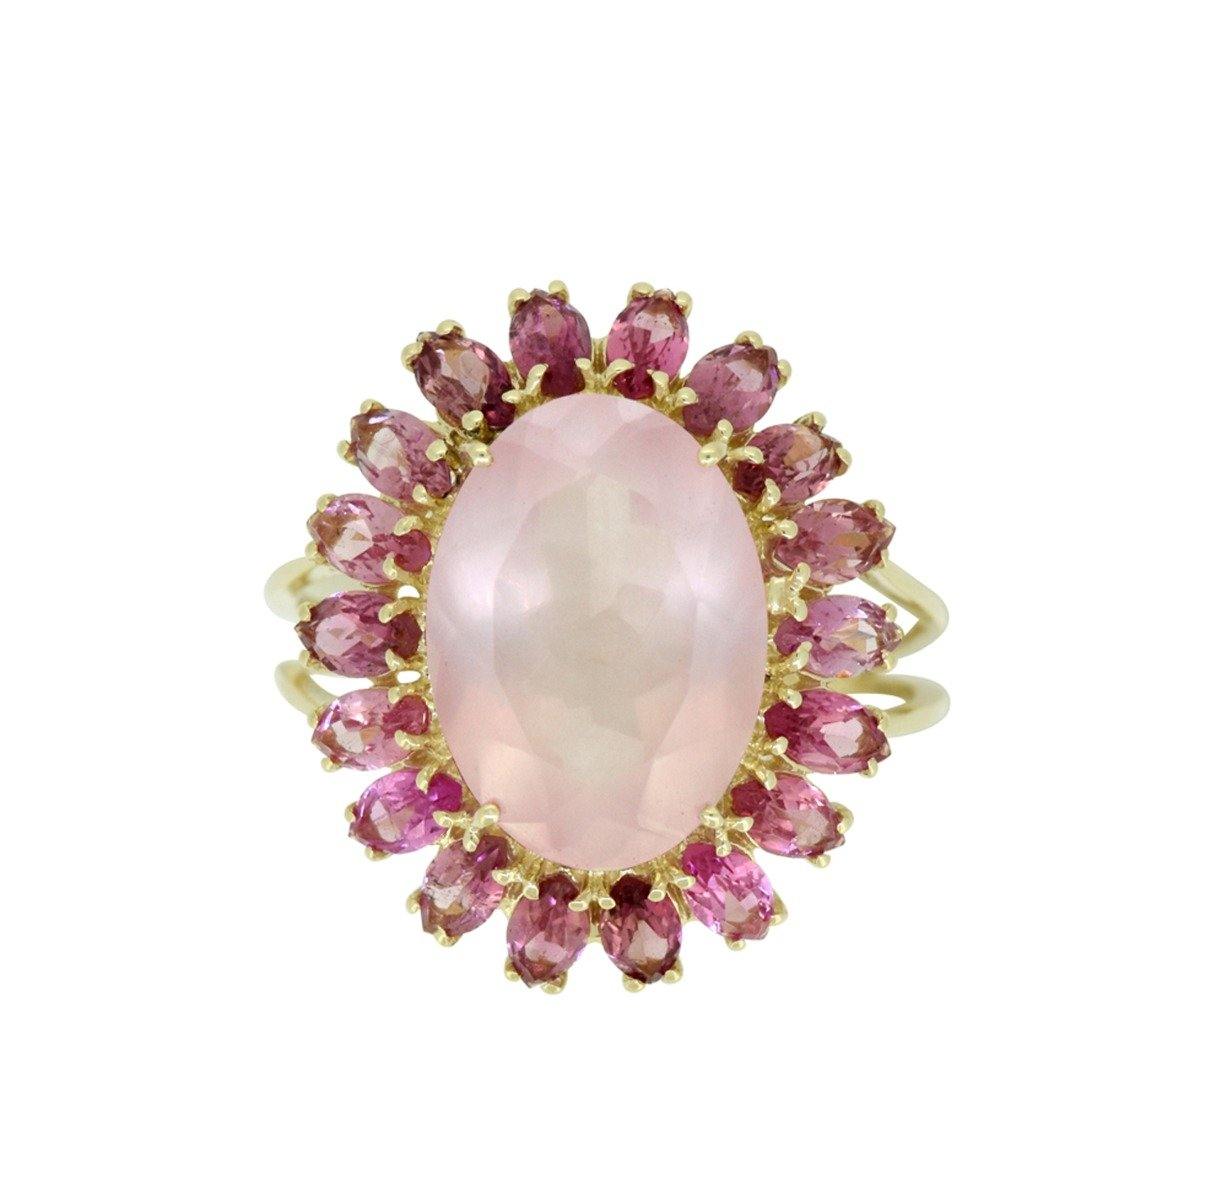 7.51 Ct Rose Quartz Pink Tourmaline Solid 14k Yellow Gold Cluster Ring Jewelry - YoTreasure